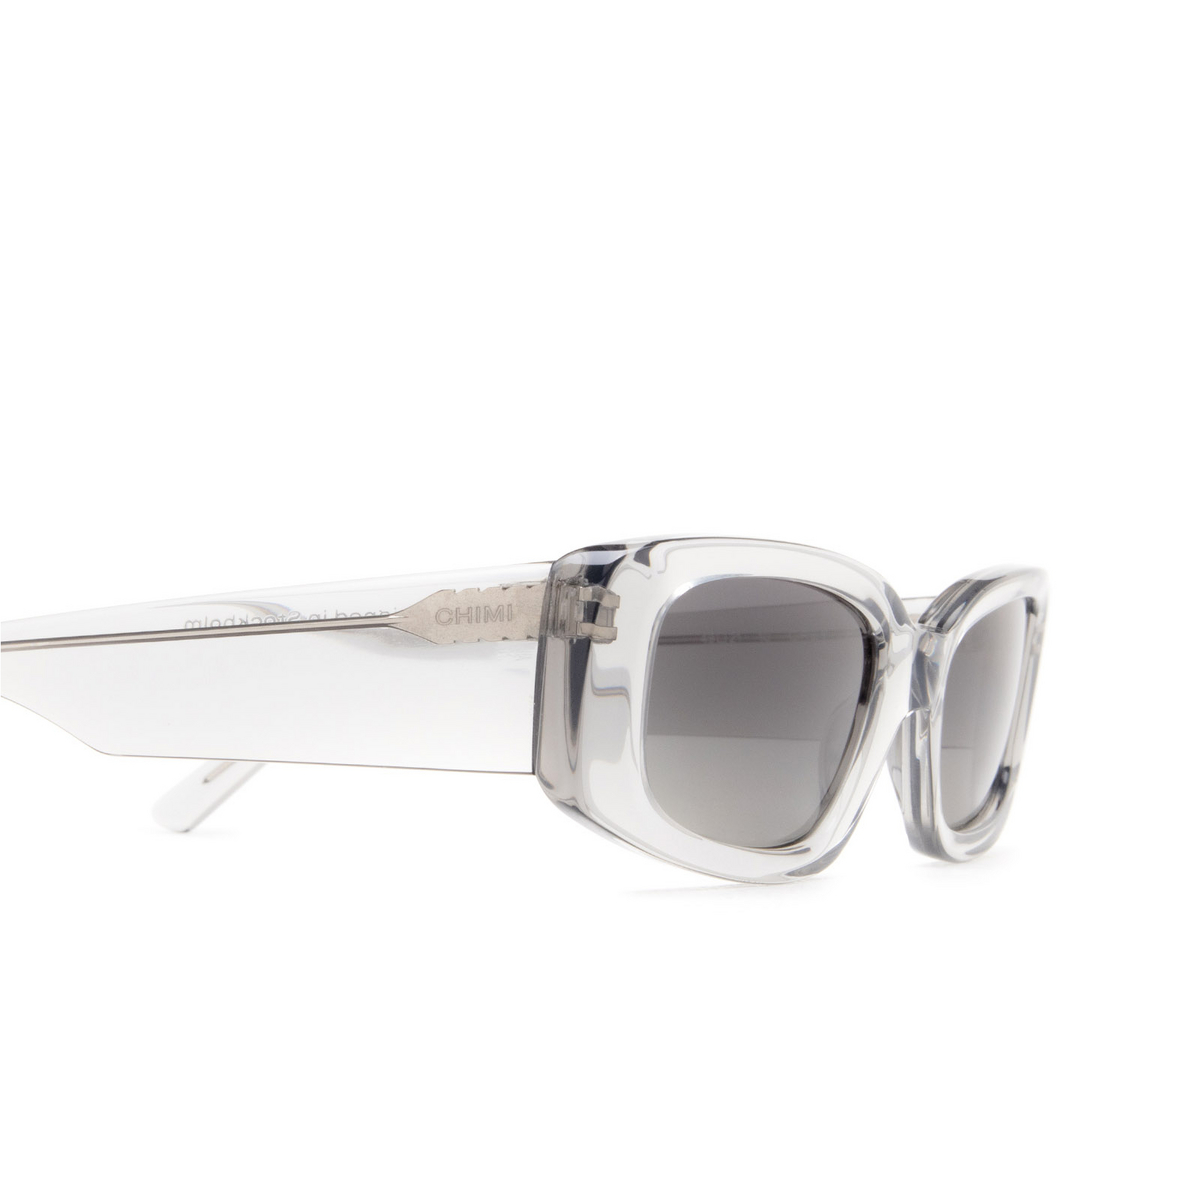 Chimi® Rectangle Sunglasses: 10 color Grey - 3/4